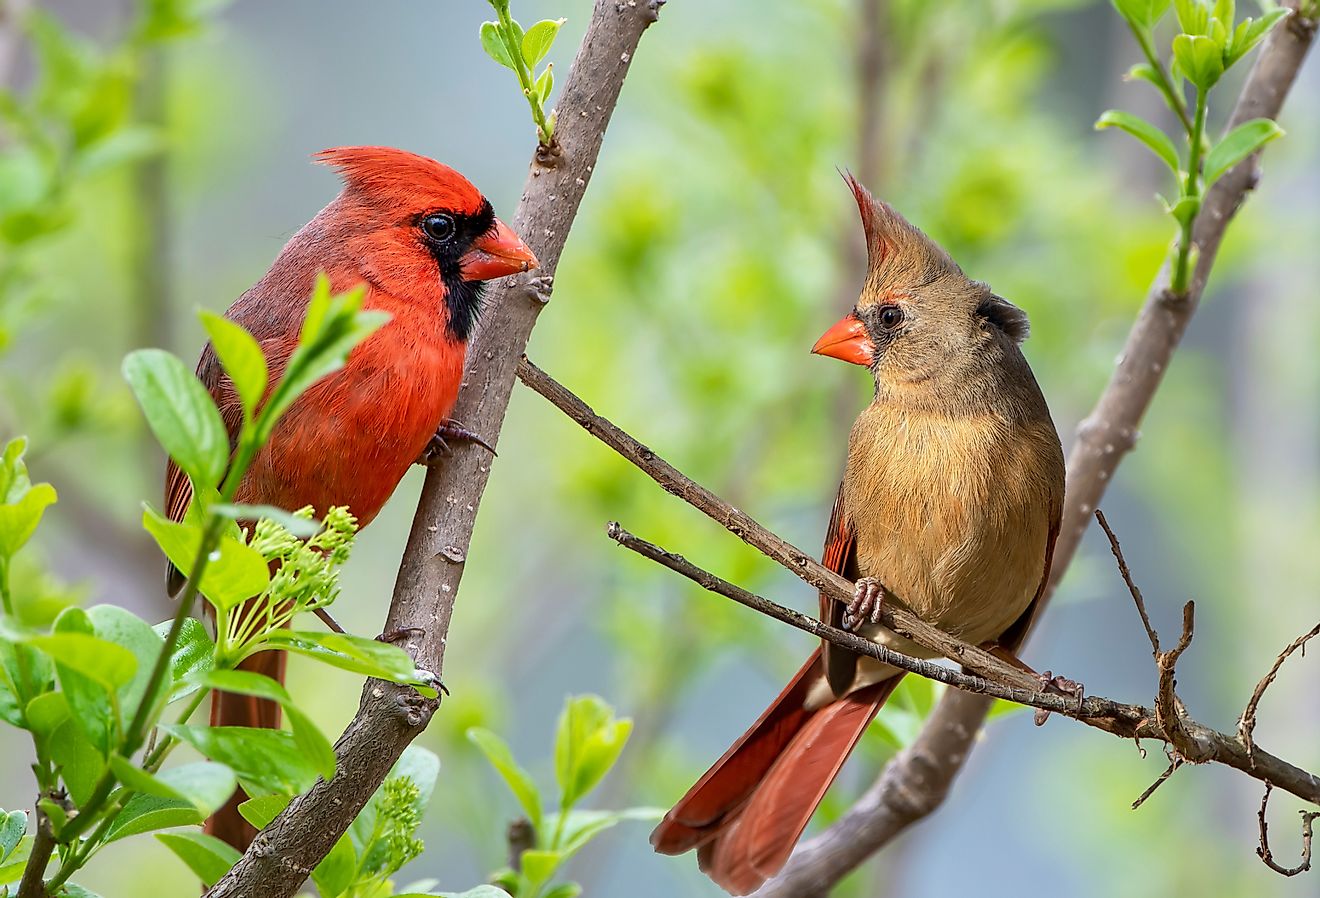 Northern Cardinal Pair with bright spring green habitat.